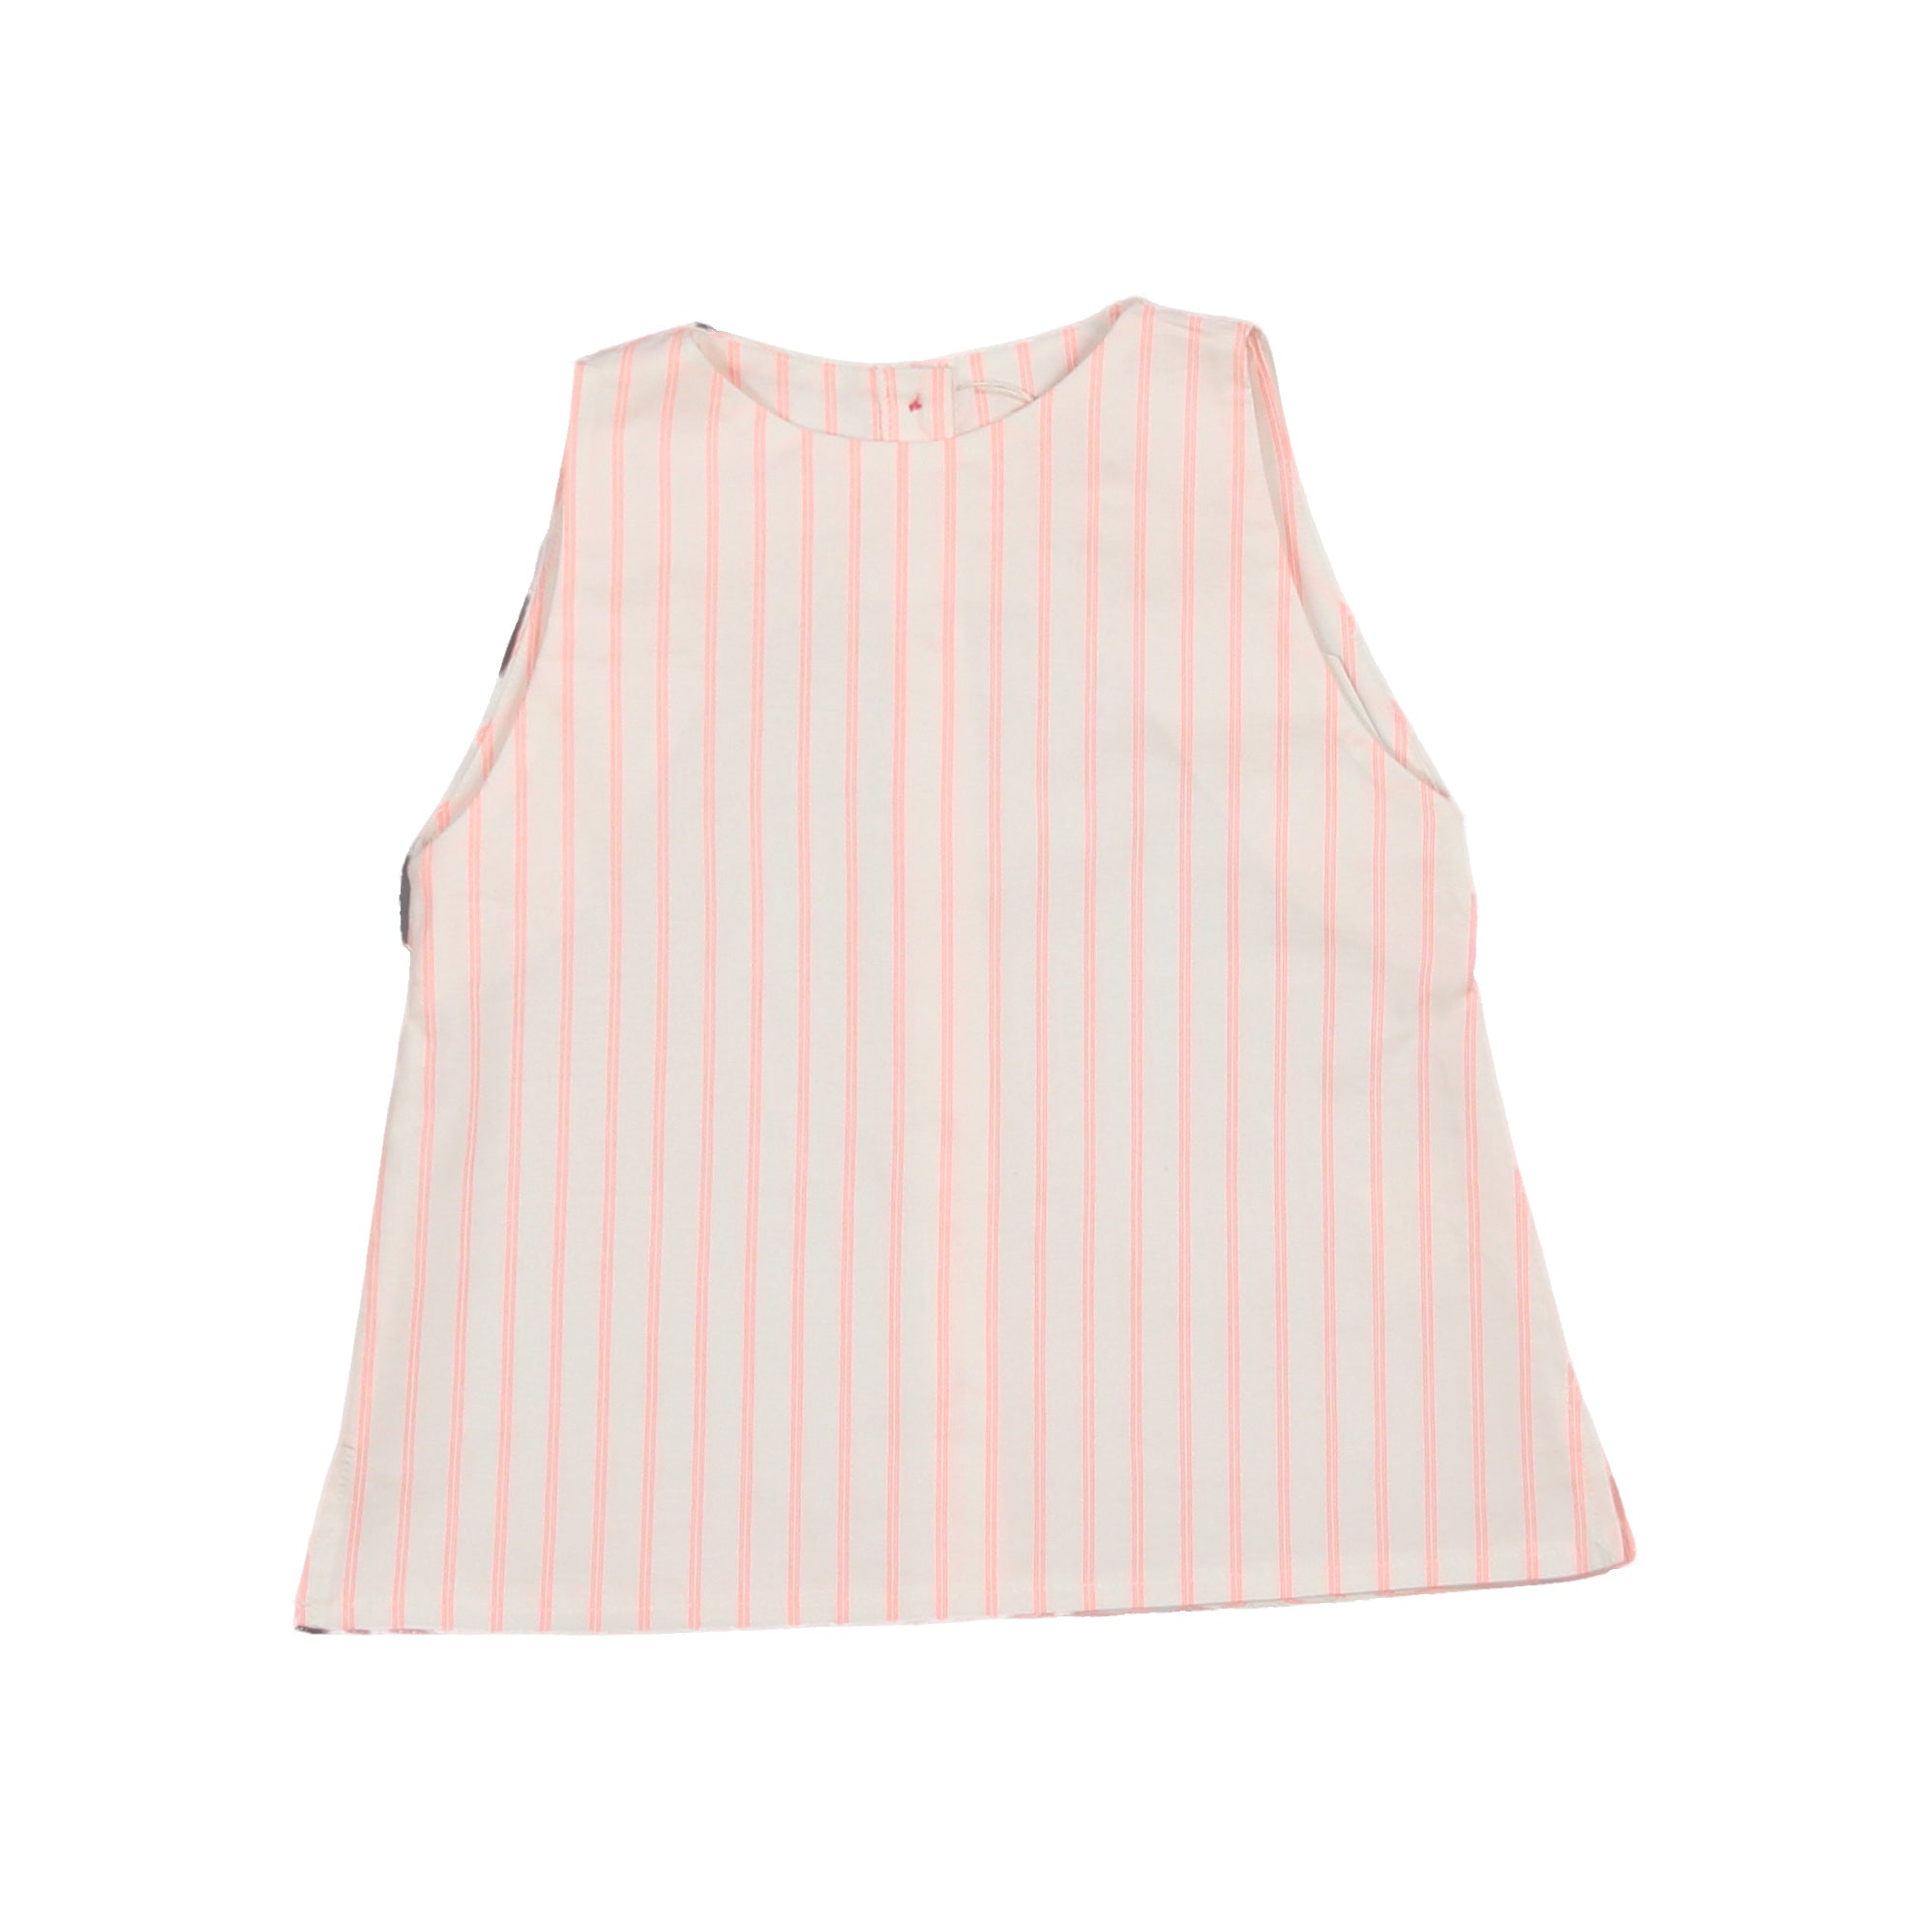 Girls Pink Striped Cotton Top